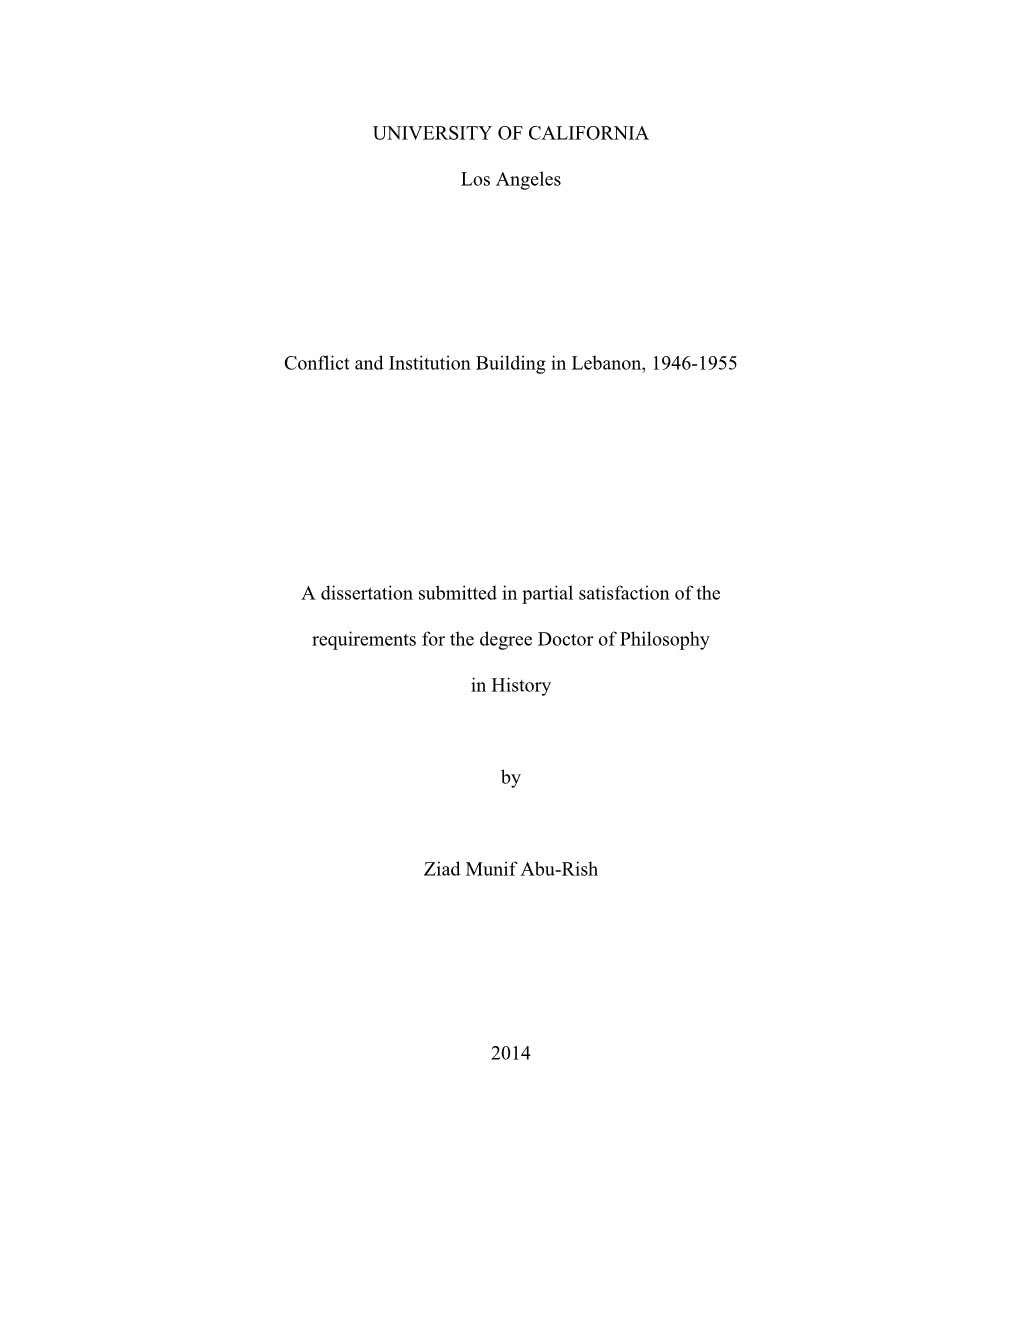 Dissertation-Master-Cover Copy